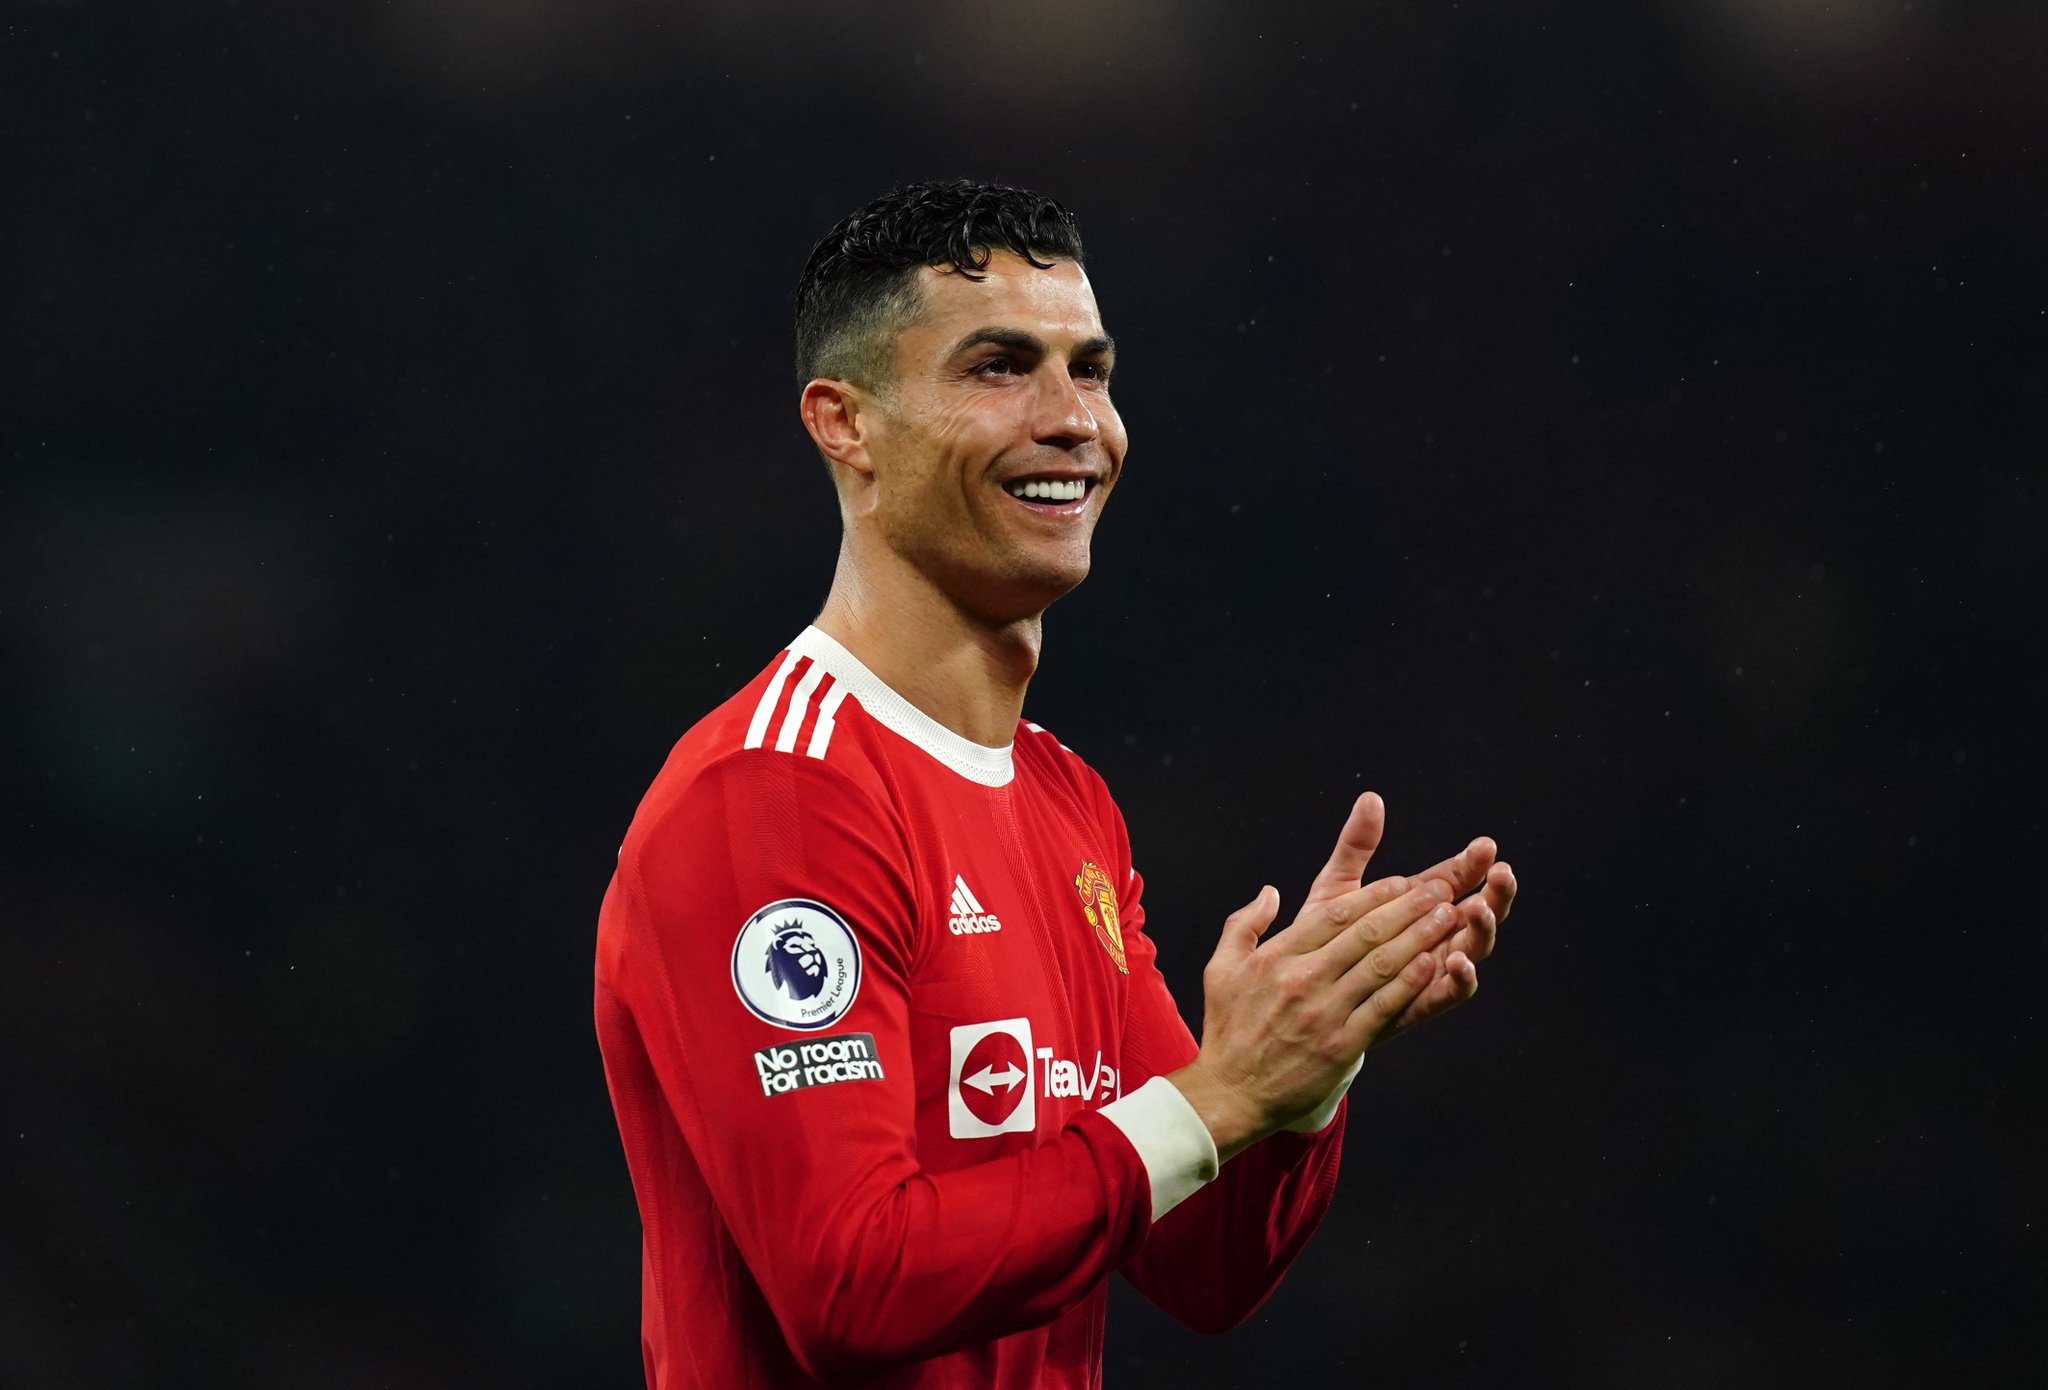 Mercato: Cristiano Ronaldo a demandé à quitter Manchester United